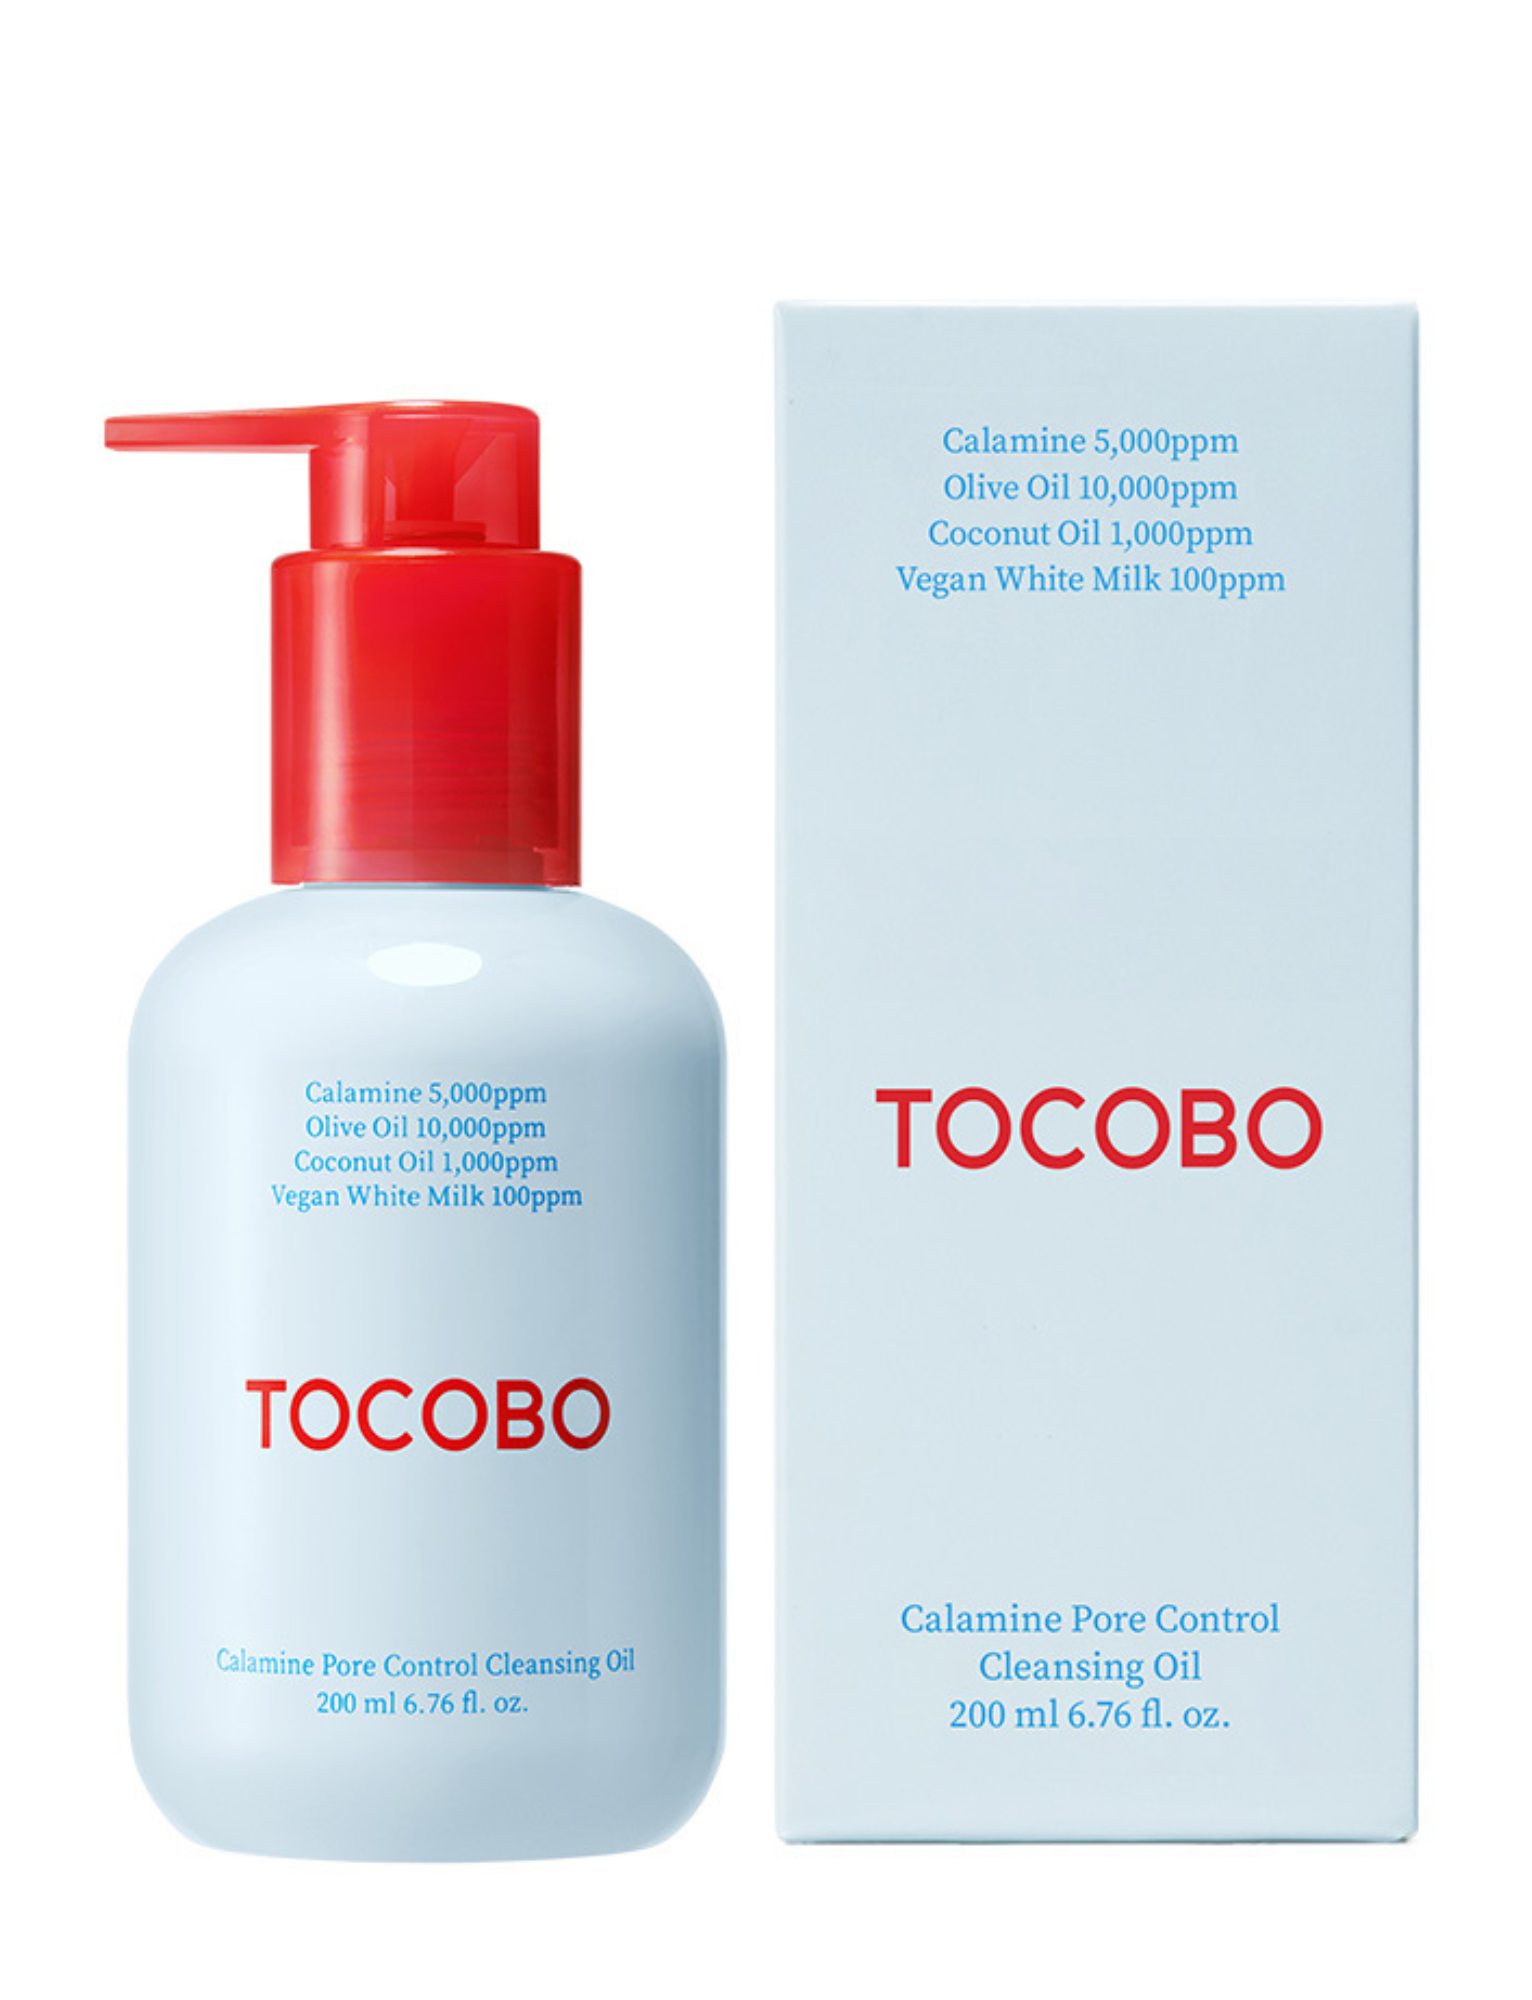 Calamine pore Control Cleansing Oil 200 ml